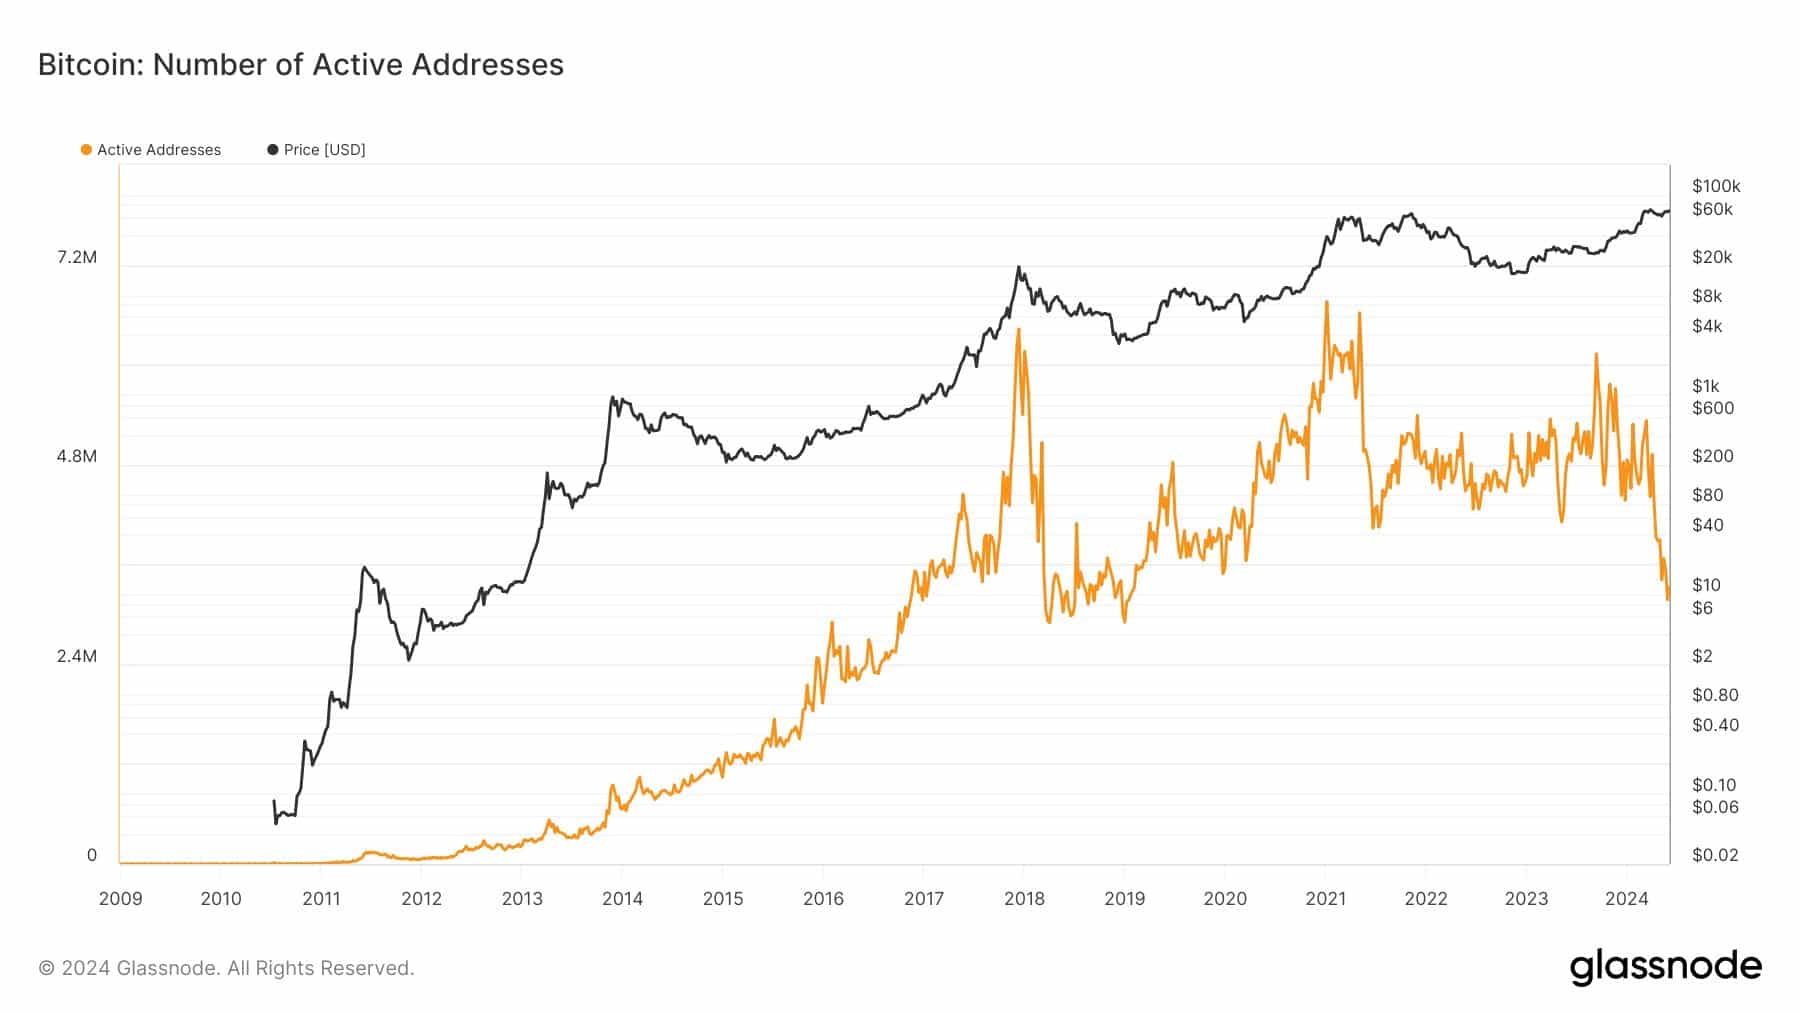 Gráfico de endereços ativos de Bitcoin - Fonte: Glassnode